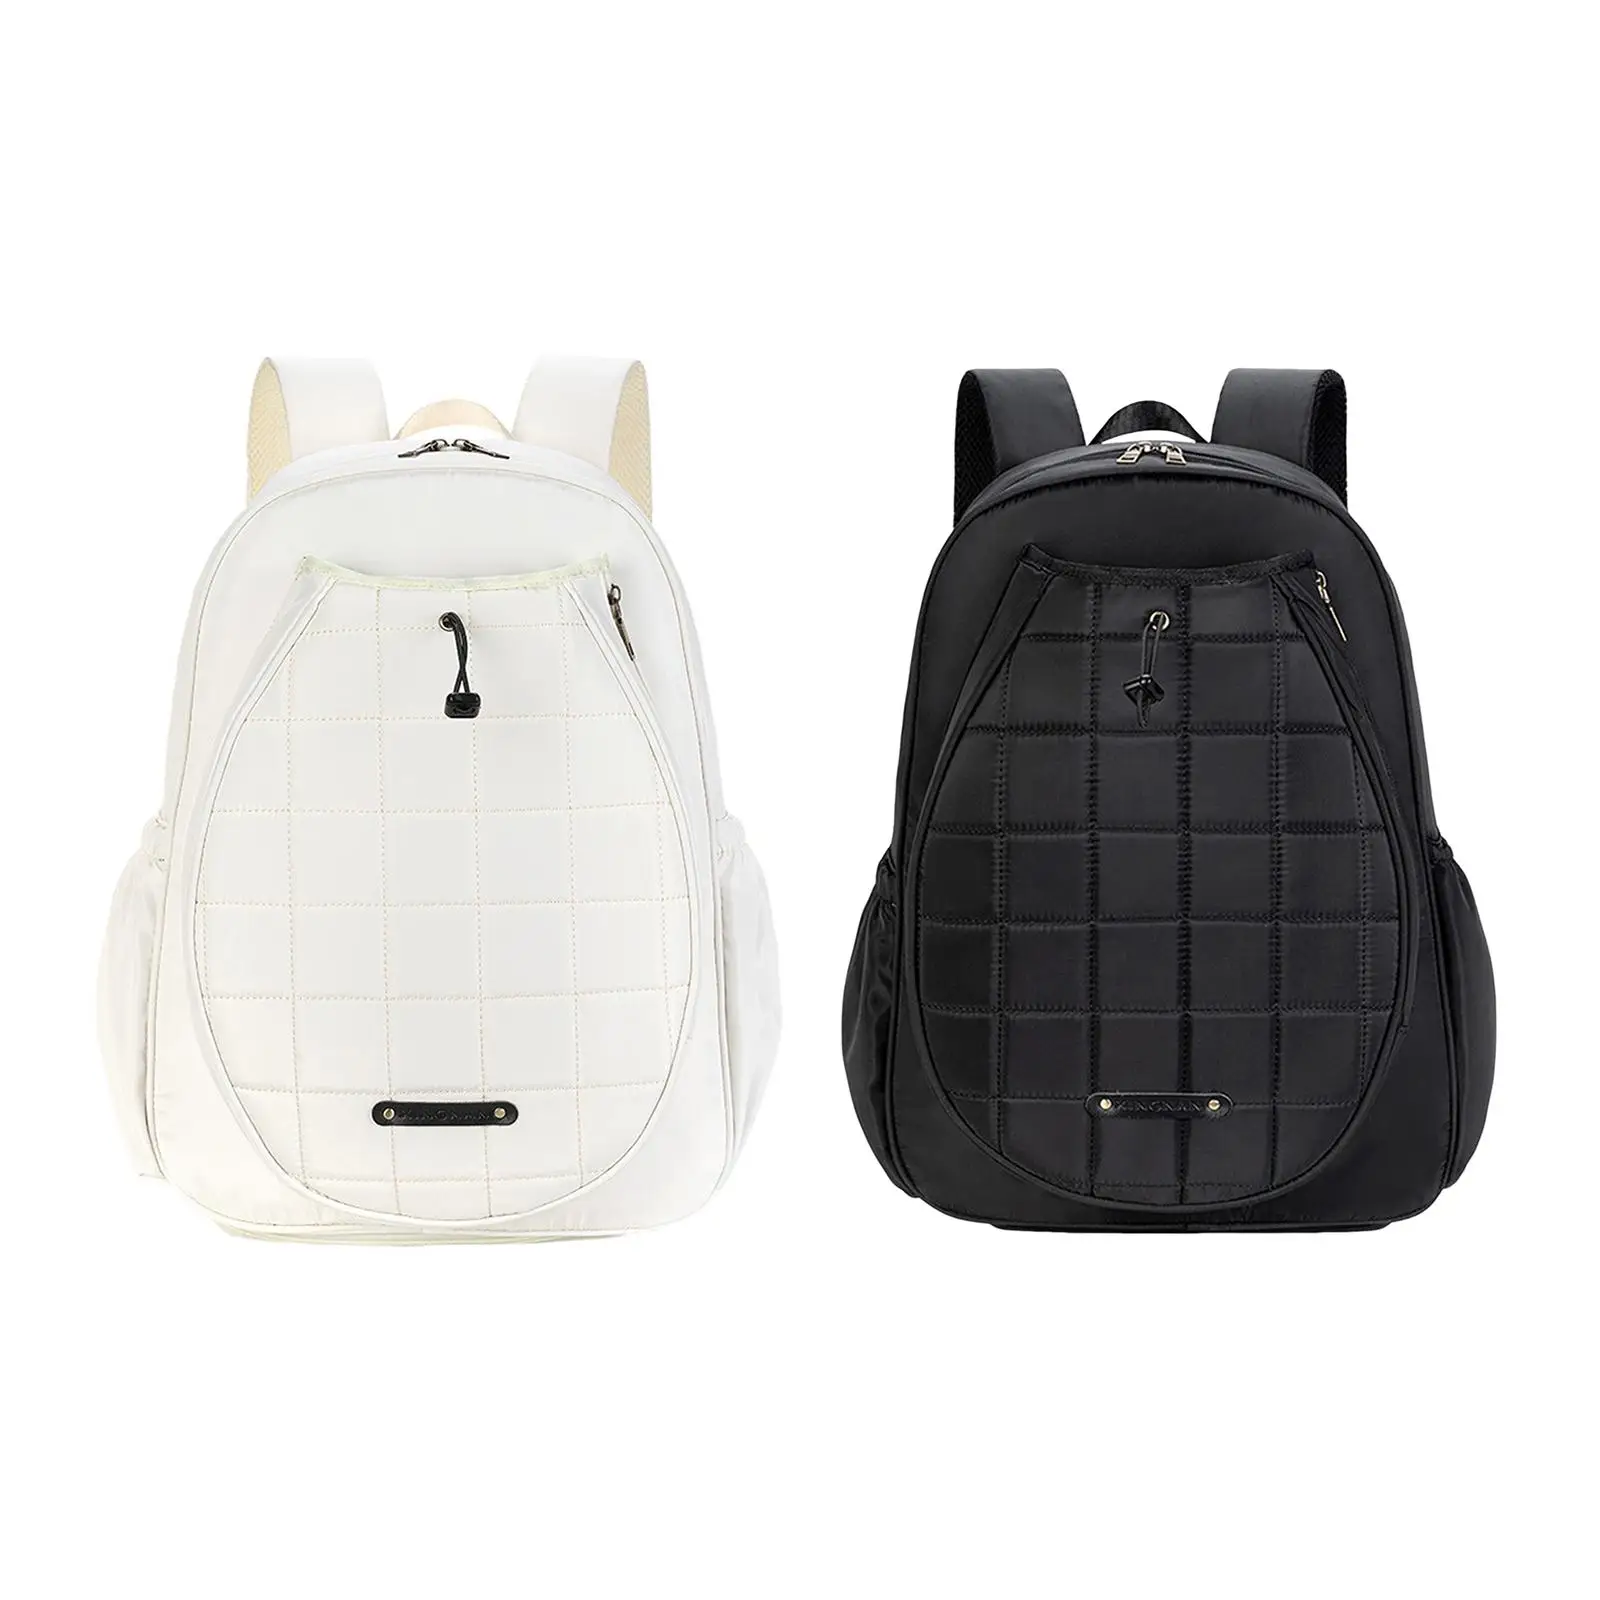 Tennis Backpack Tennis Bag Outdoor Sport Bag Large Capacity Racket Bag Racquet Cover for Tennis Racket Balls Accessories